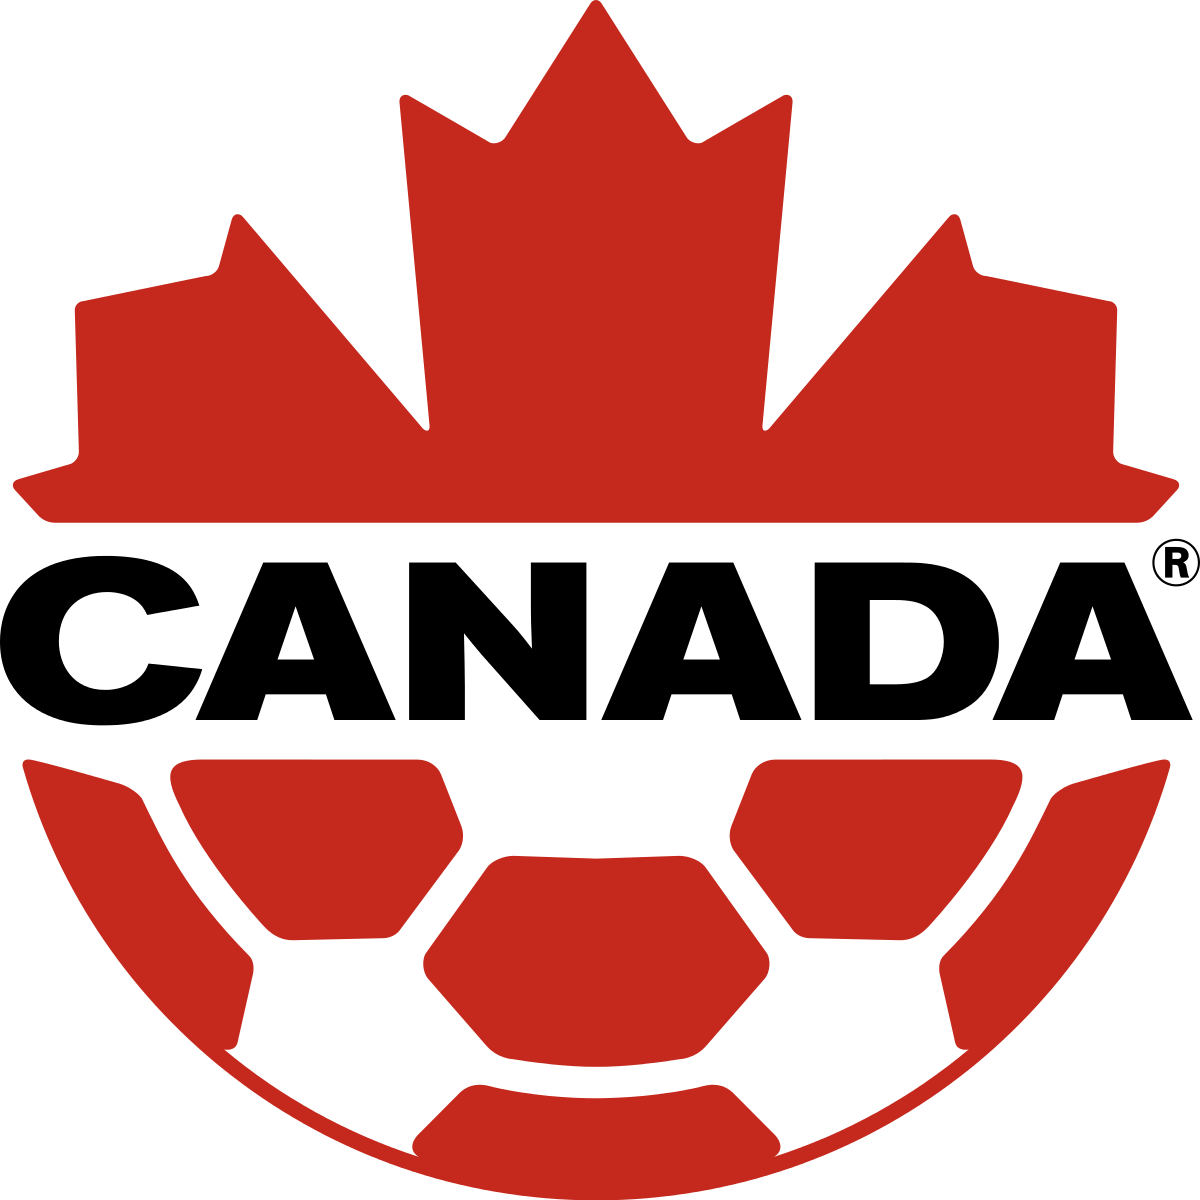 Canada Men S National Soccer Team Wikipedia